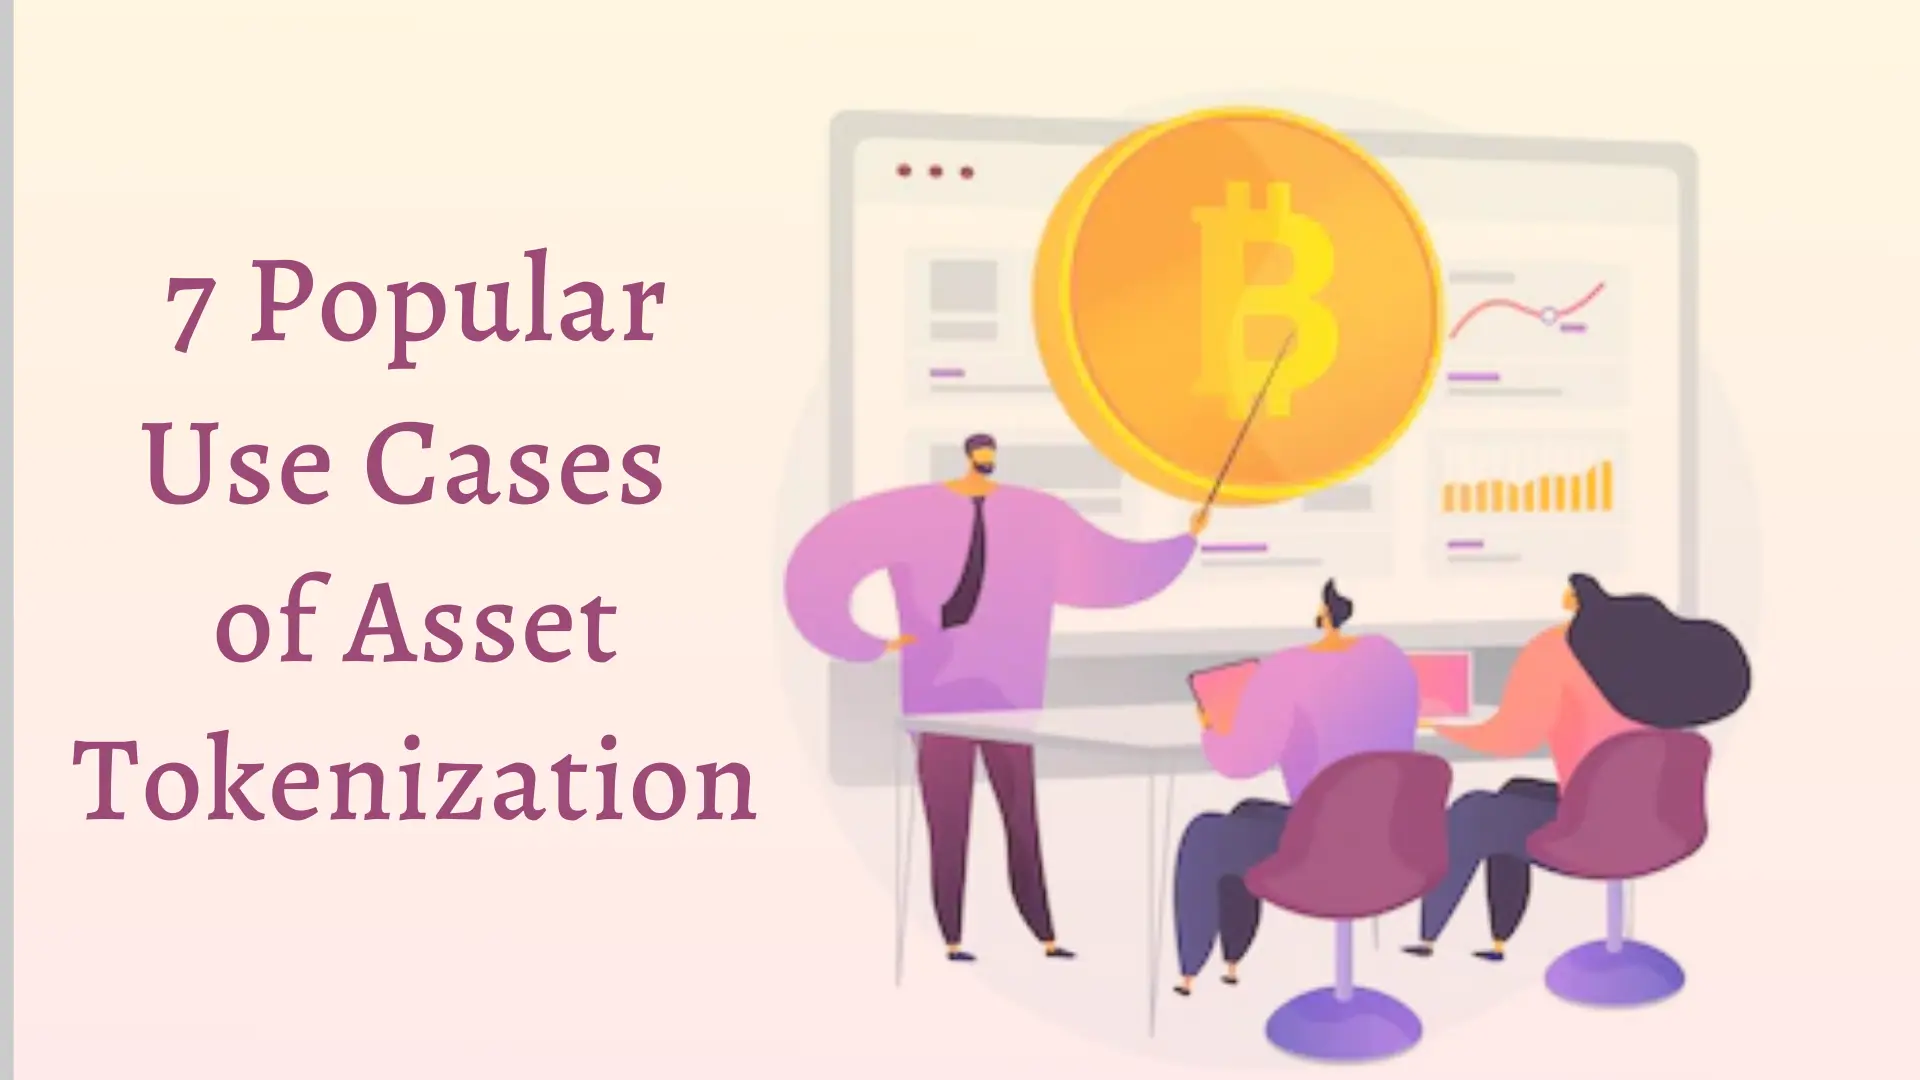 7 Popular Use Cases of Asset Tokenization